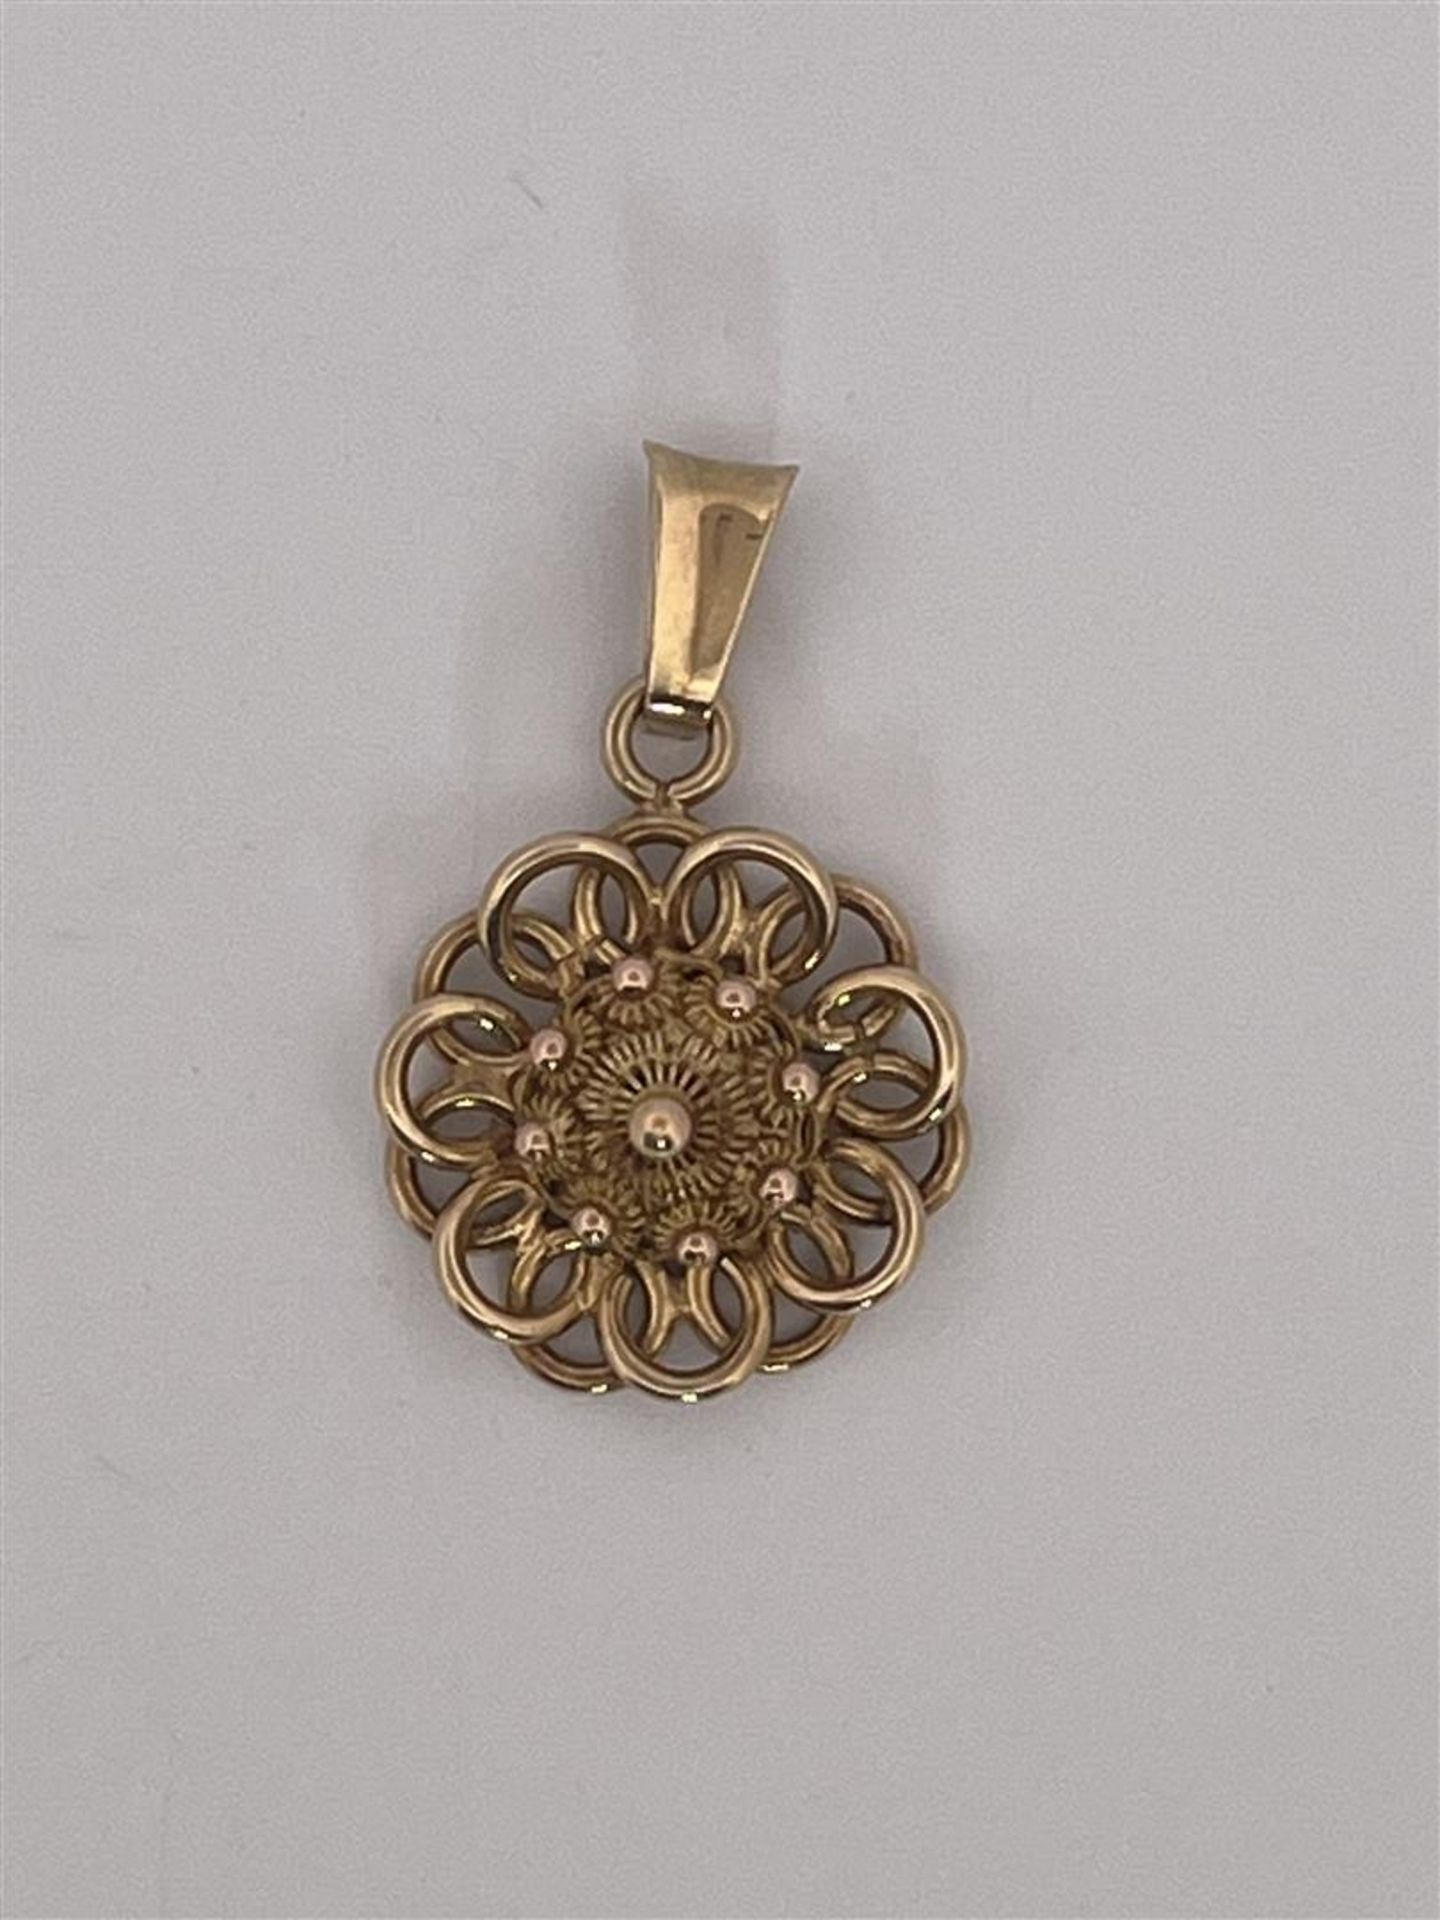 14kt yellow gold Zeeland button pendant.
Weight: 2.8 grams.
Dimensions: 27.5mm x 17.2mm.